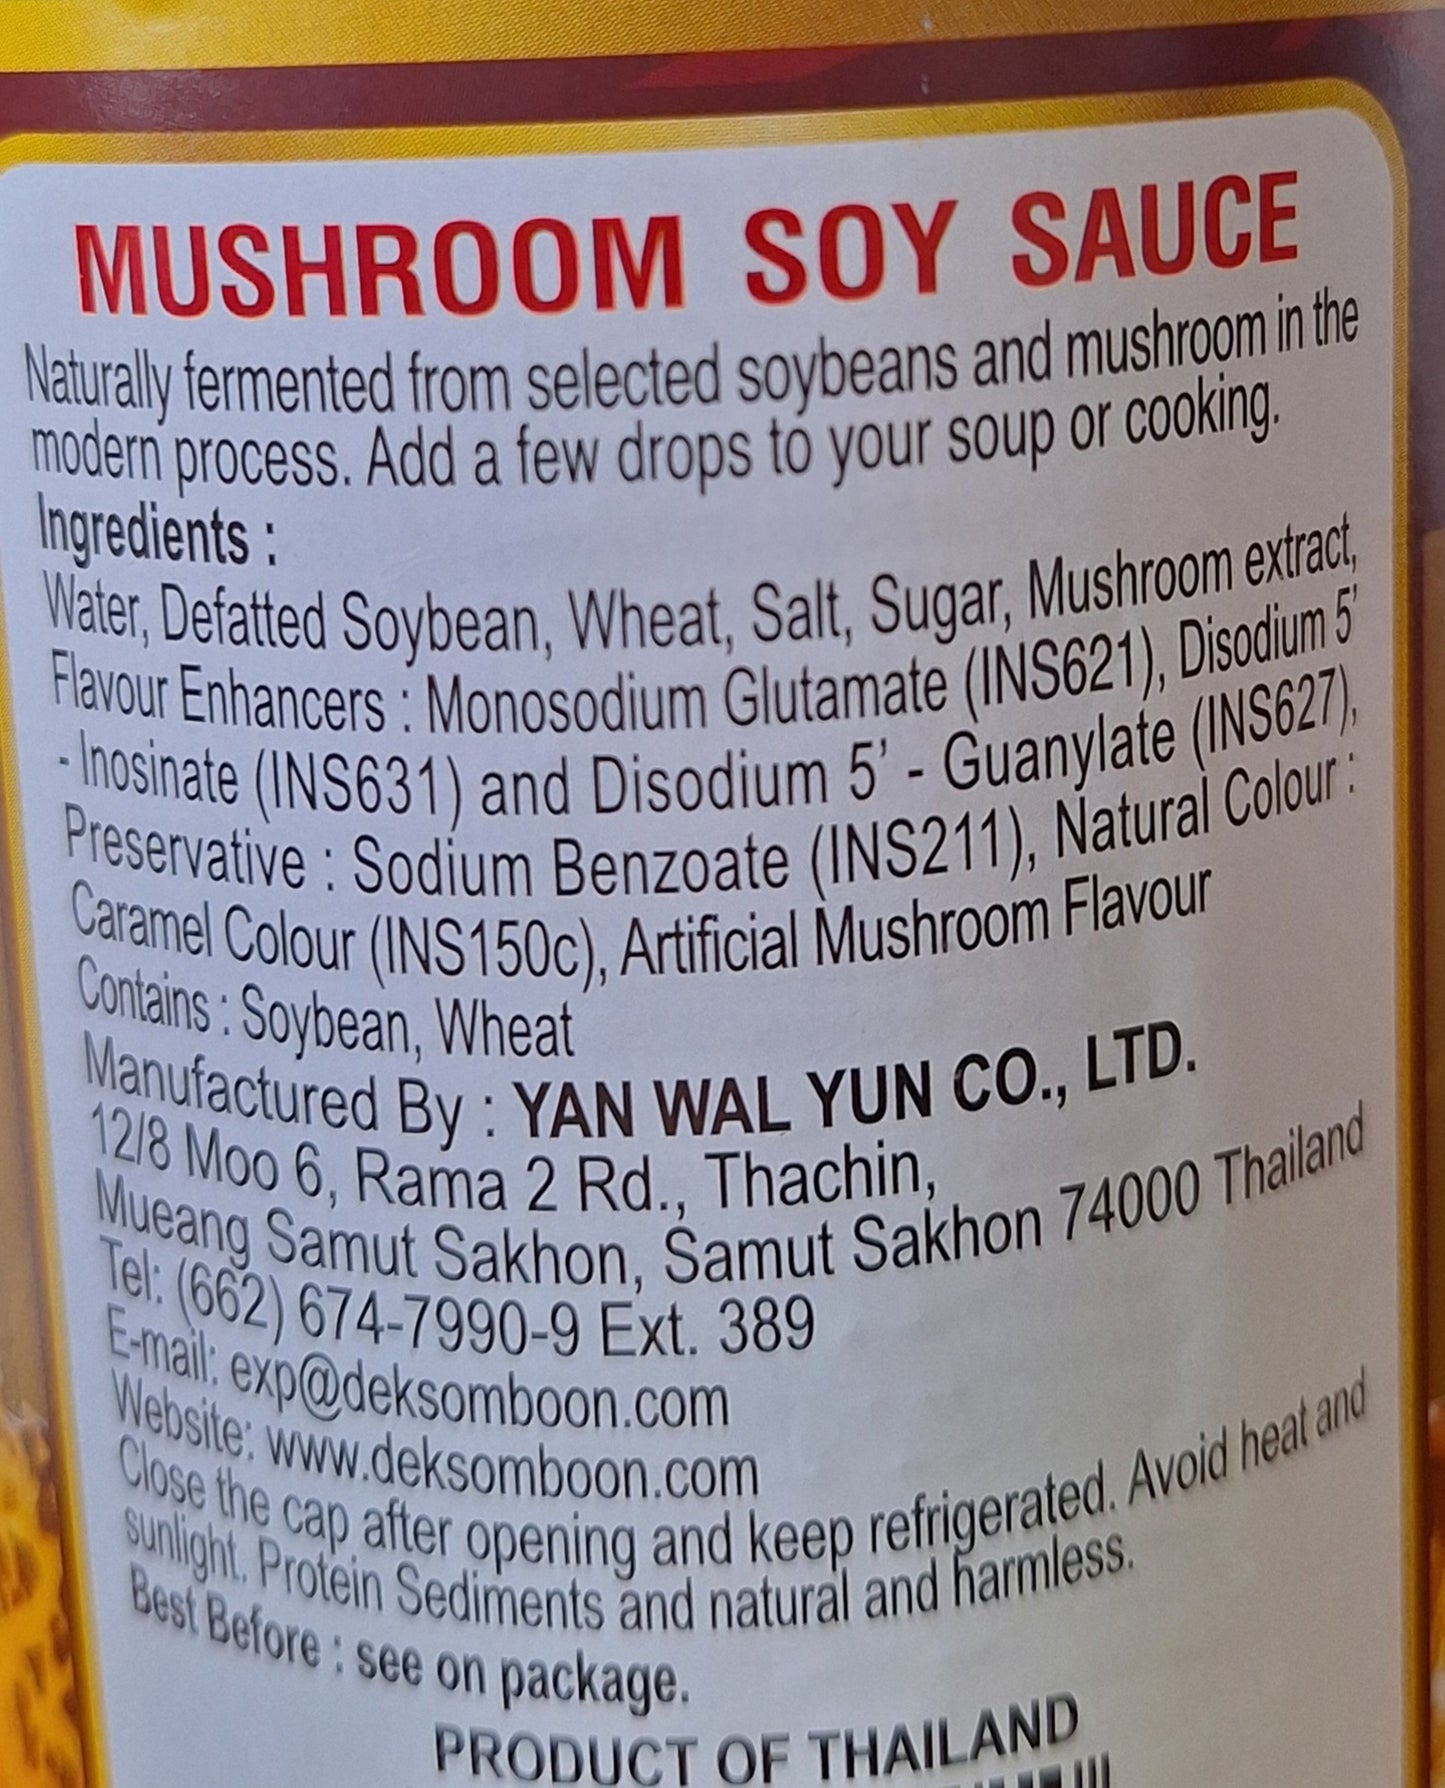 Healthy Boy Dek Som Boon -Thai Mushroom Soy Sauce